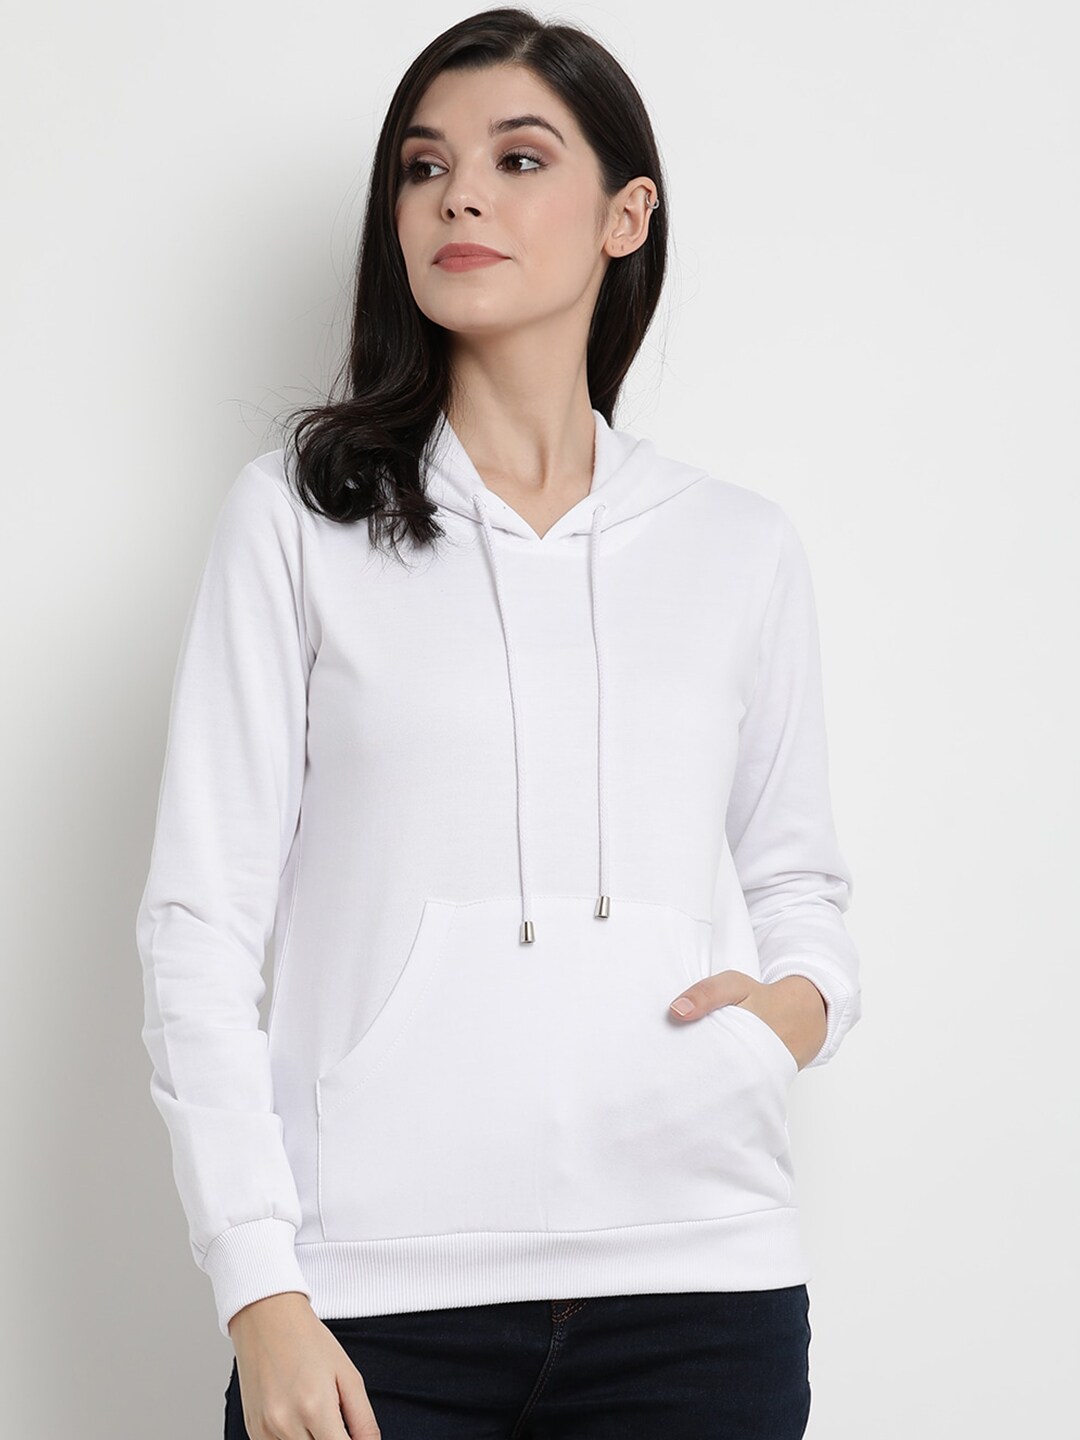 The Vanca Women White Solid Hooded Sweatshirt Price in India